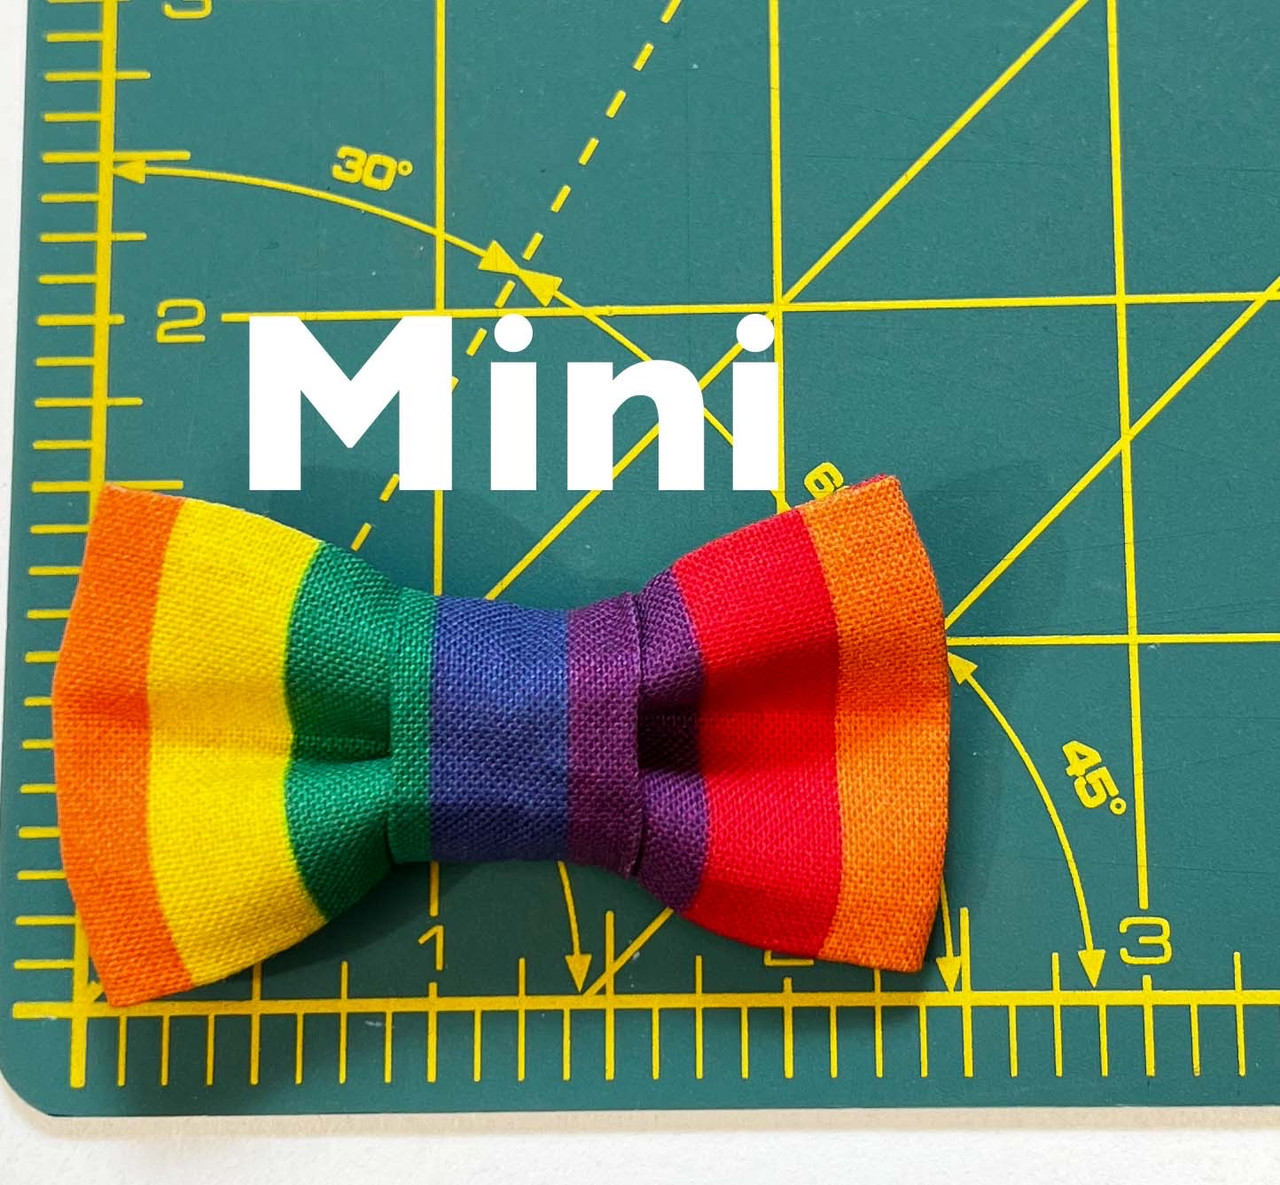 Pride Rainbow Stripes Bow Tie